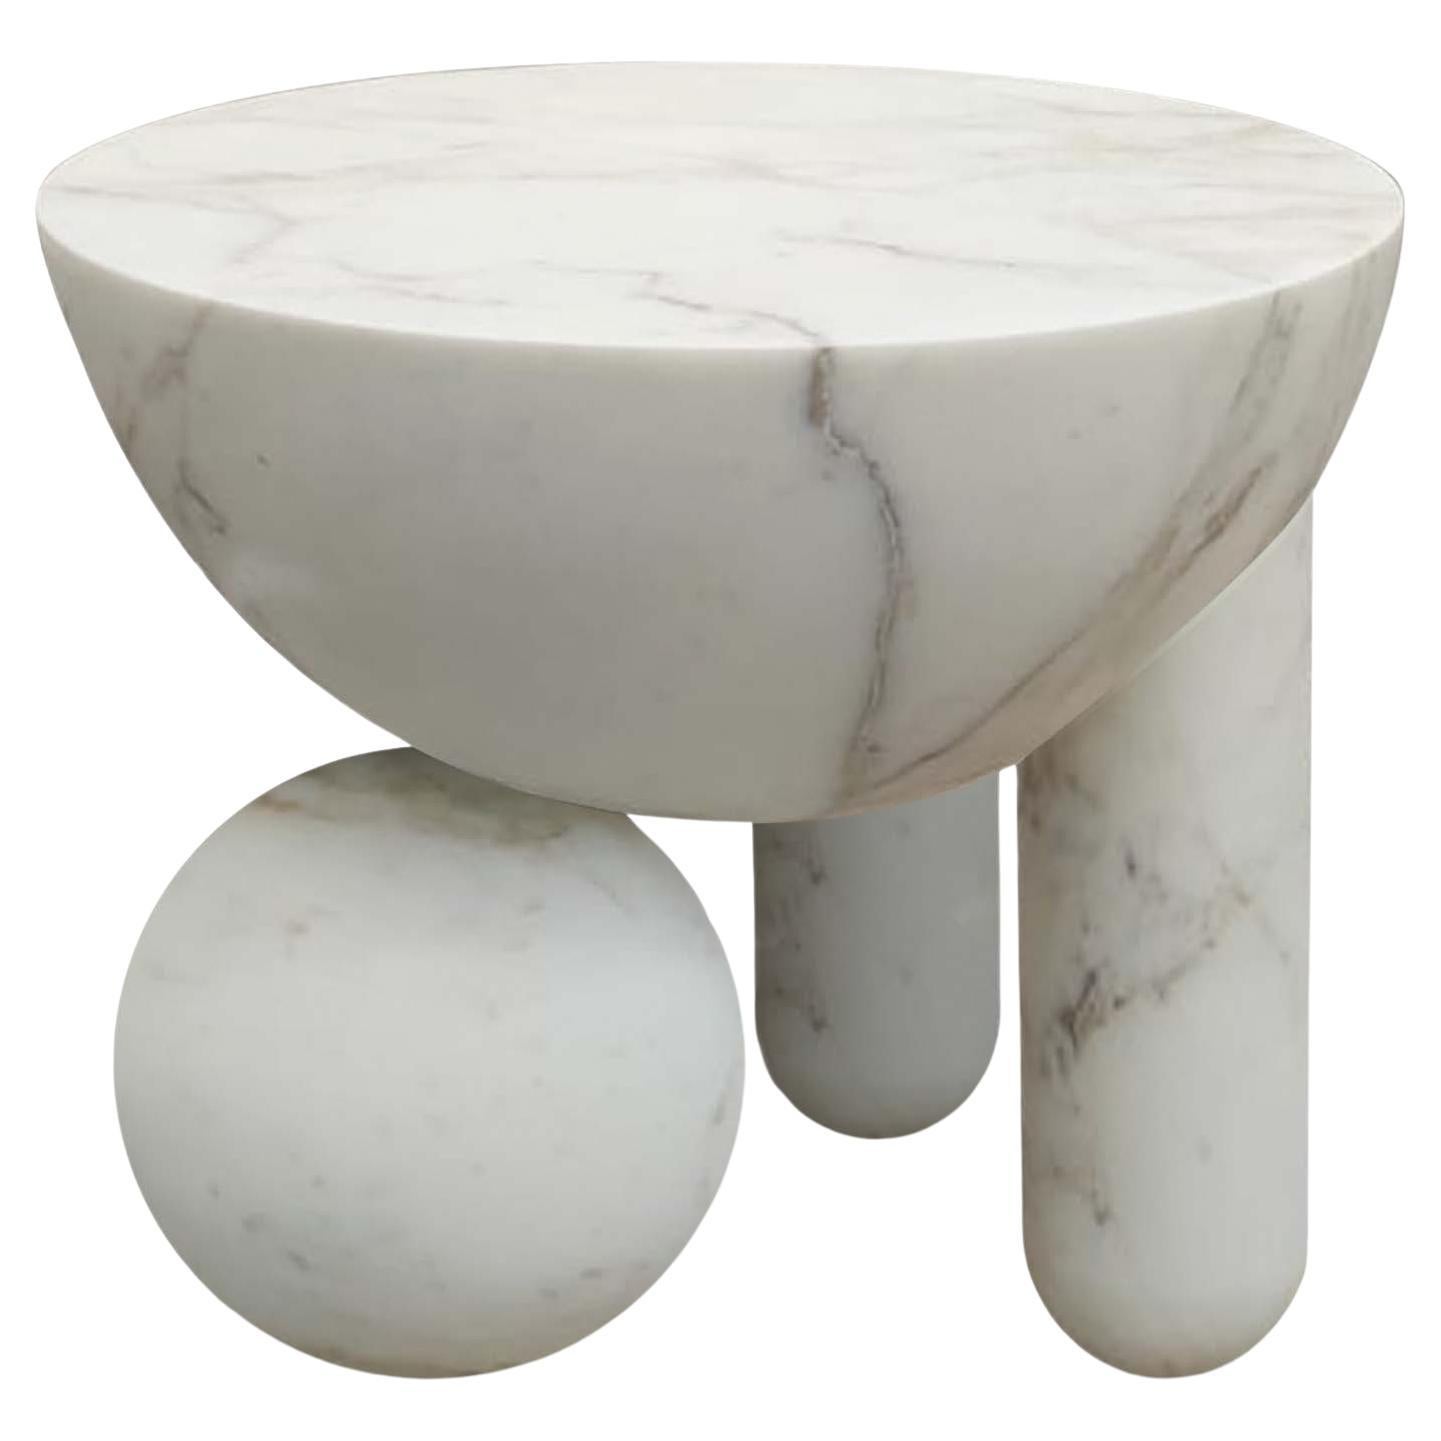 Petite table basse sculpturale Profiterole en marbre blanc de Lara Bohinc en vente